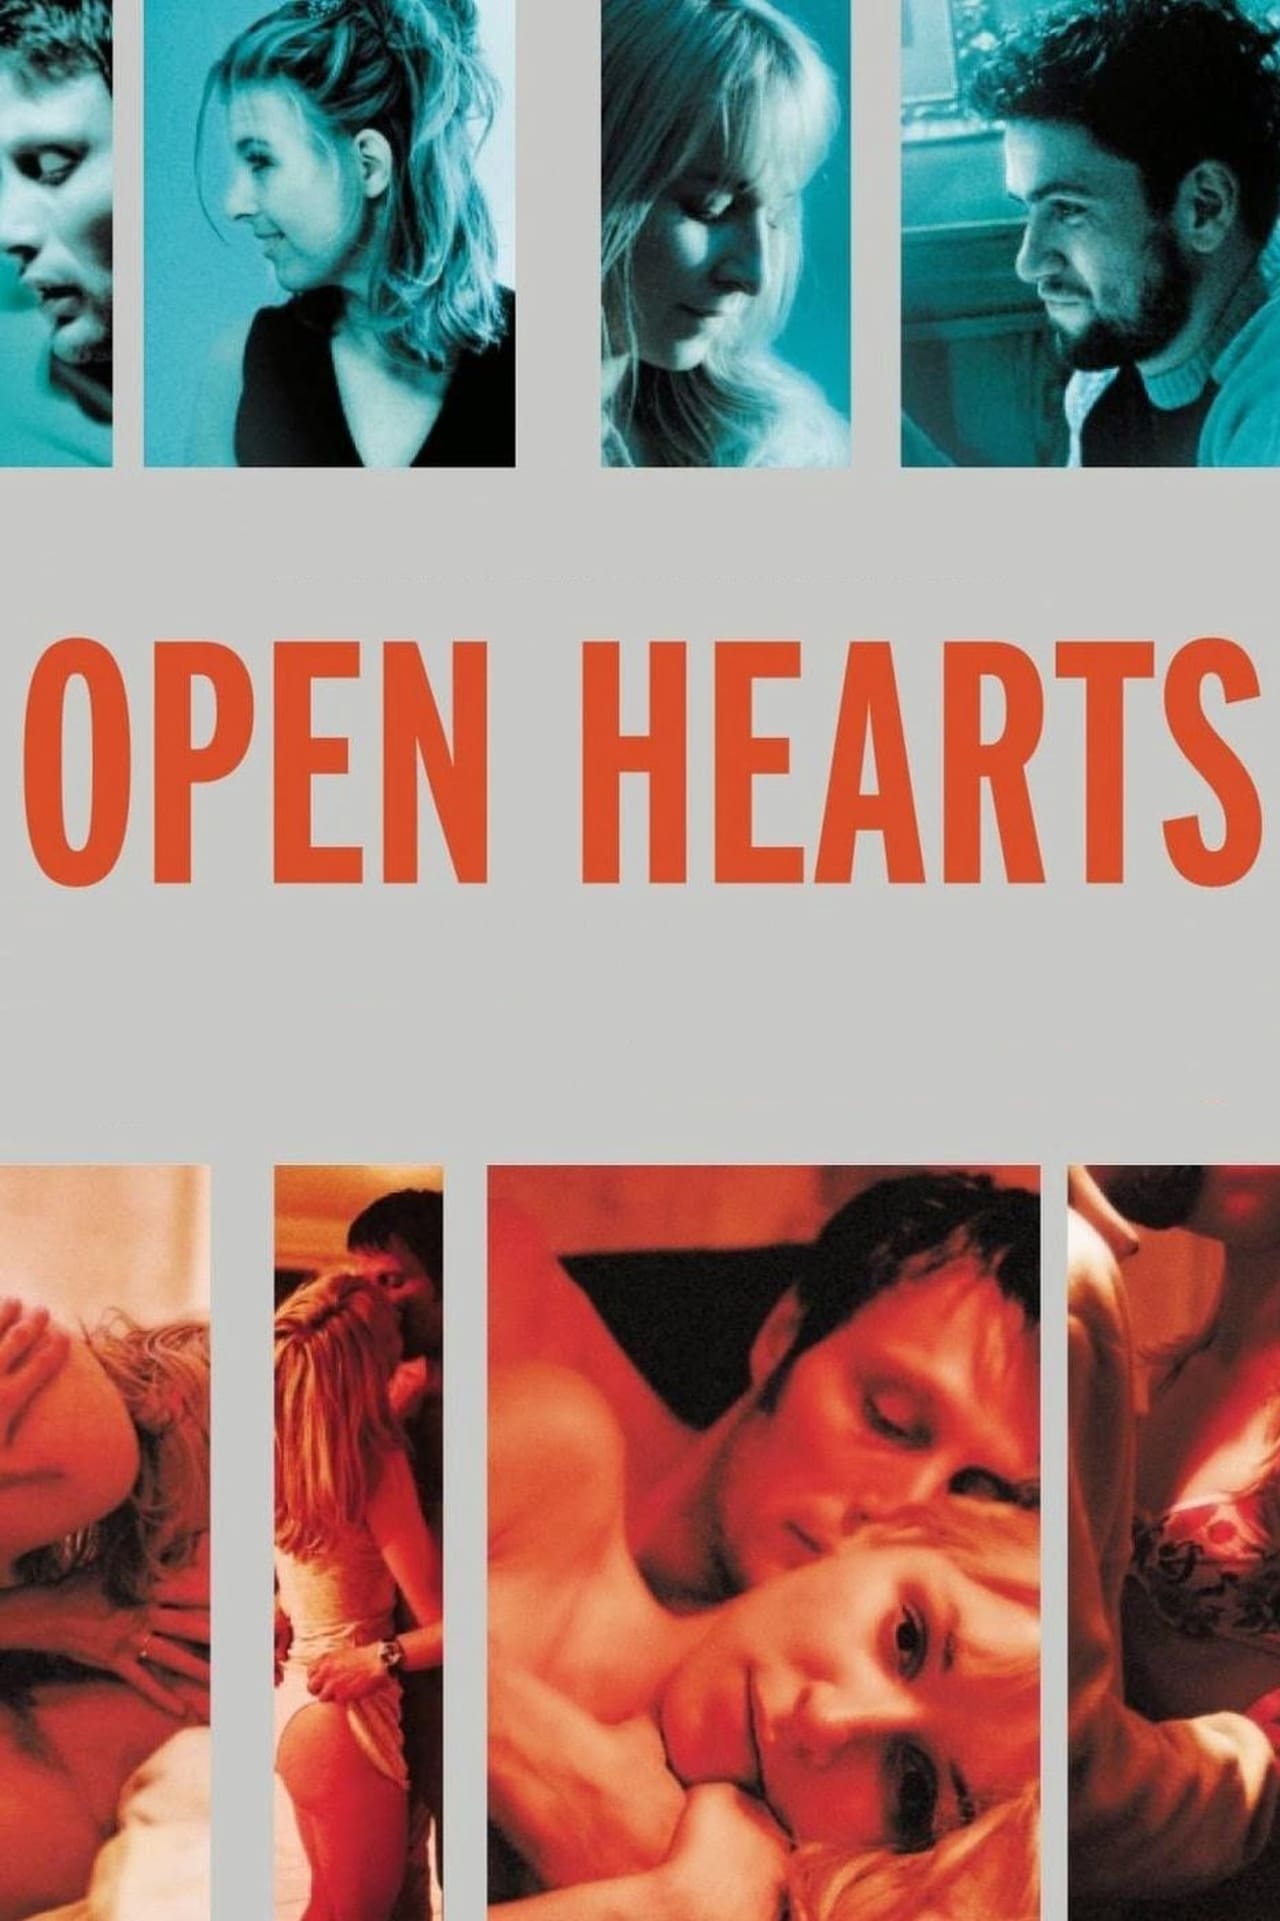 Open Hearts (2003)